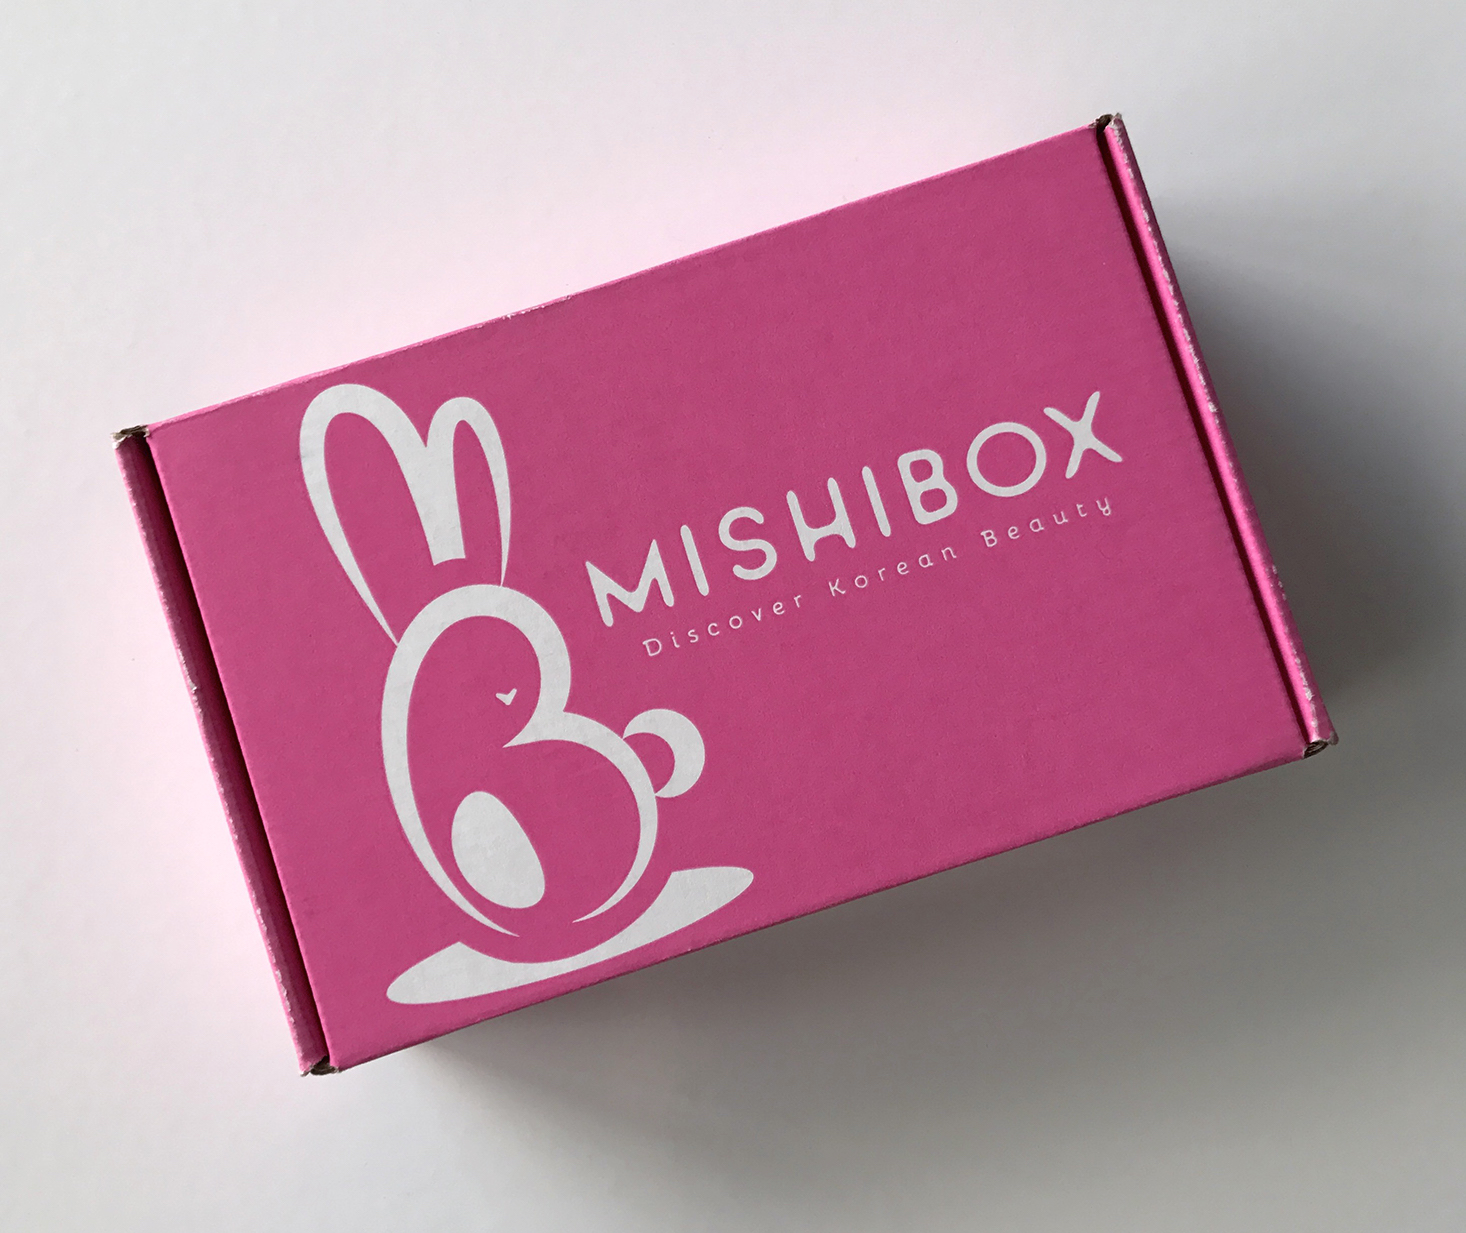 Mishibox K-Beauty Subscription Box Review – December 2016